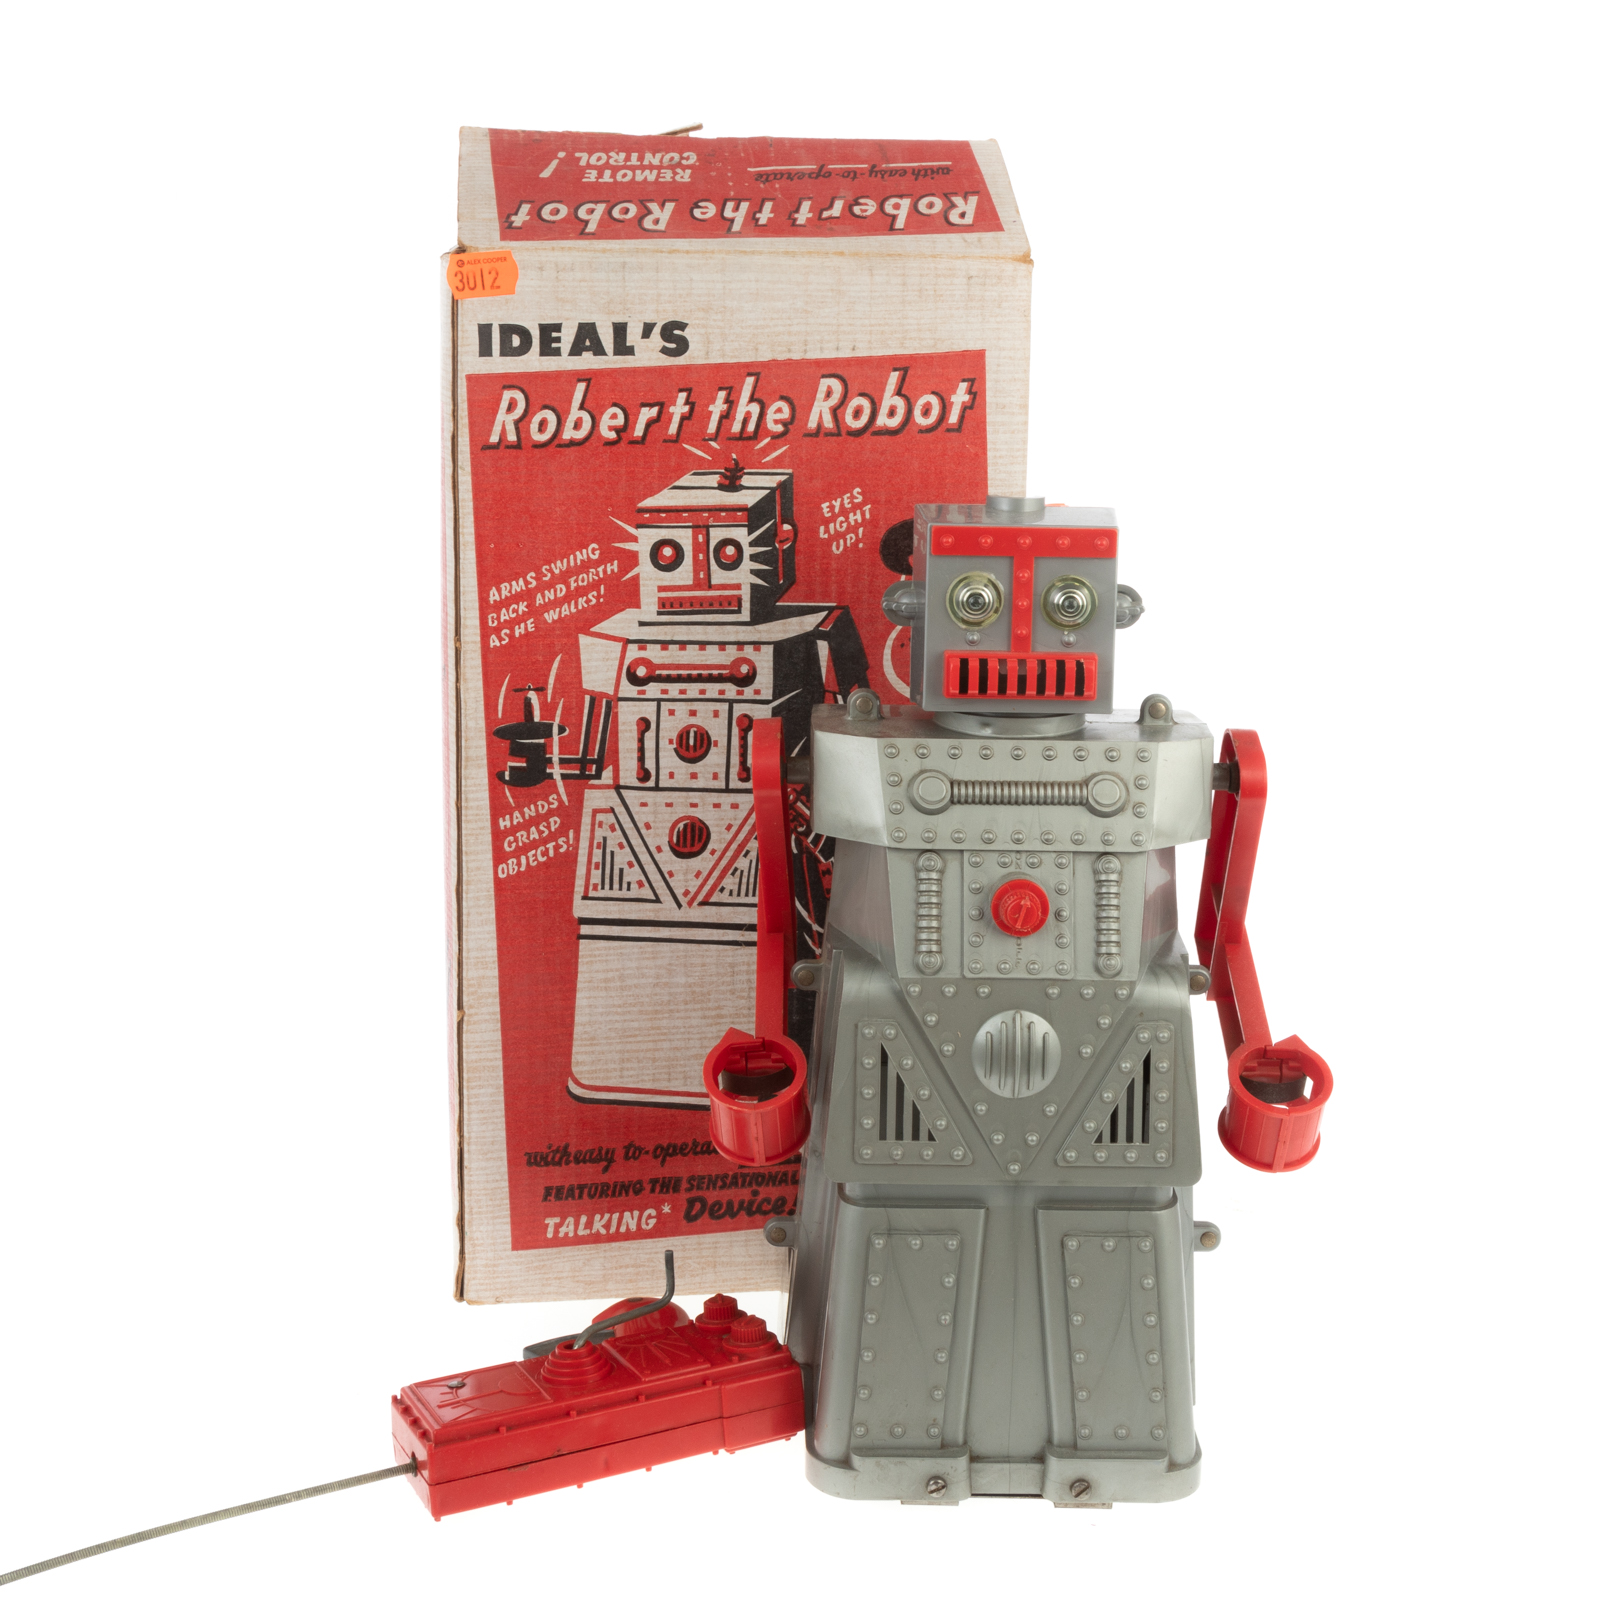 IDEAL ROBERT THE ROBOT Circa 1950s  36a03a